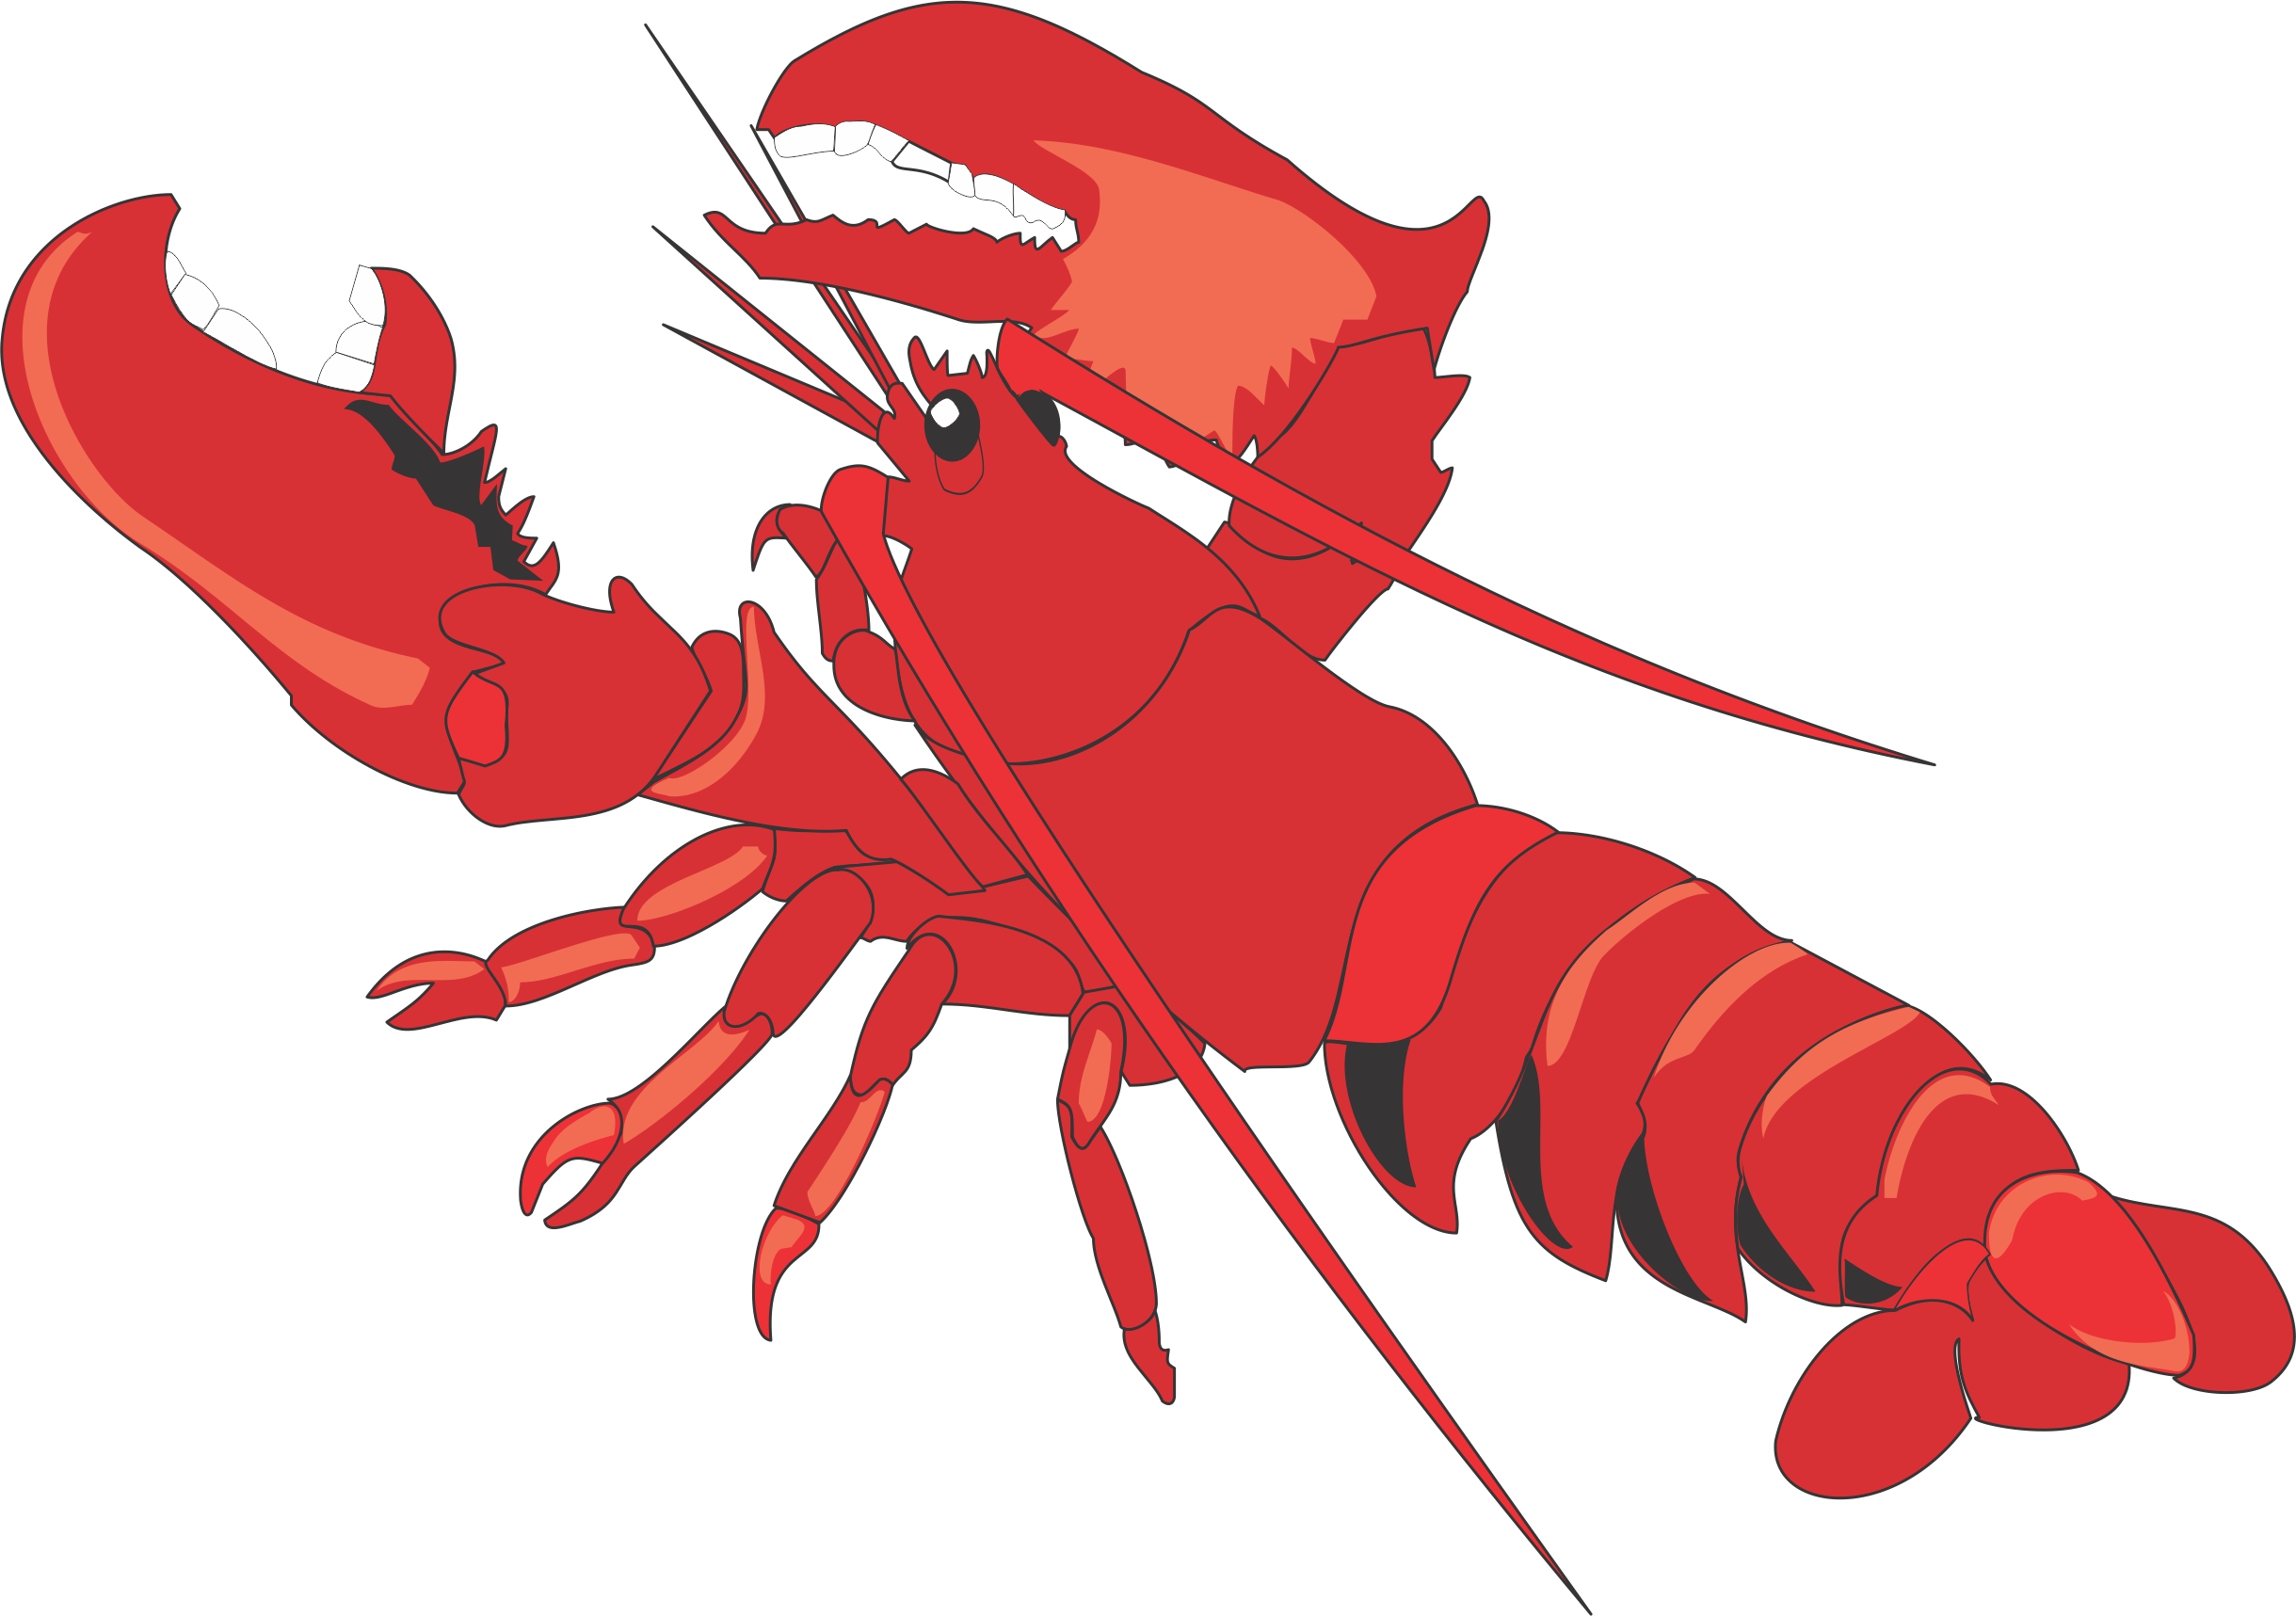 Lobster Cartoon Images